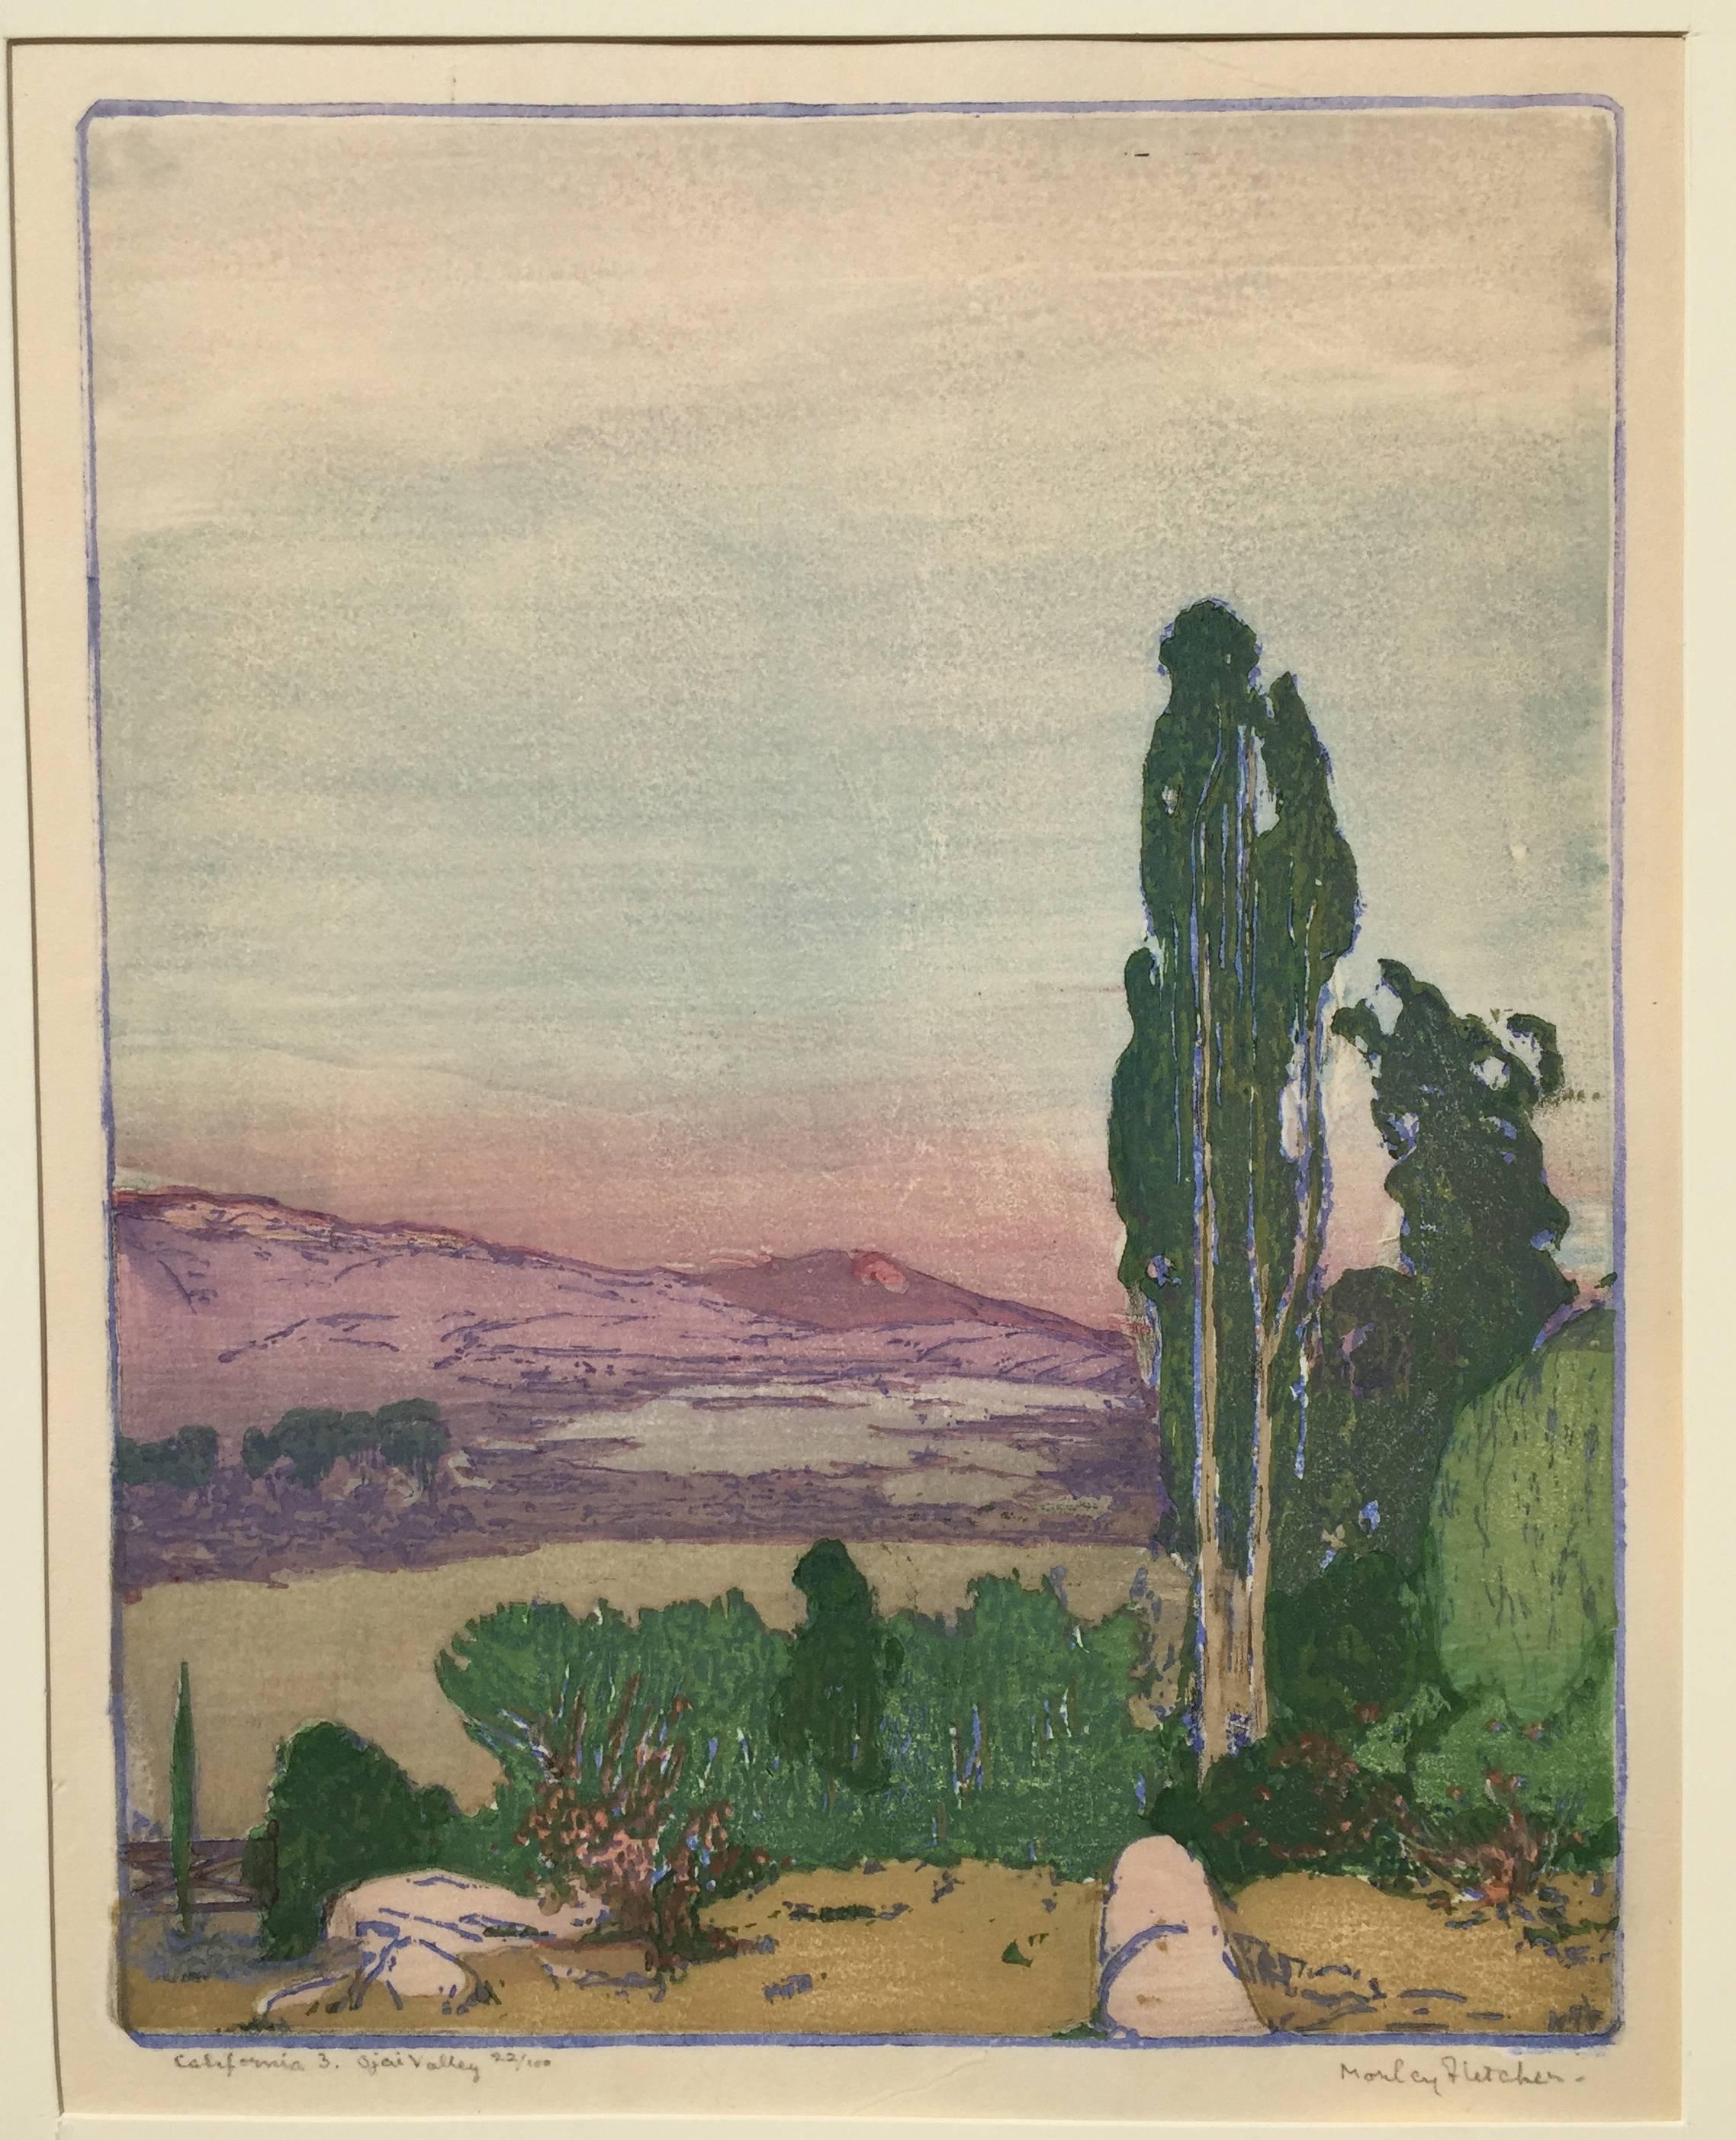 Frank Morley Fletcher Landscape Print - California - 3 - Ojai Valley